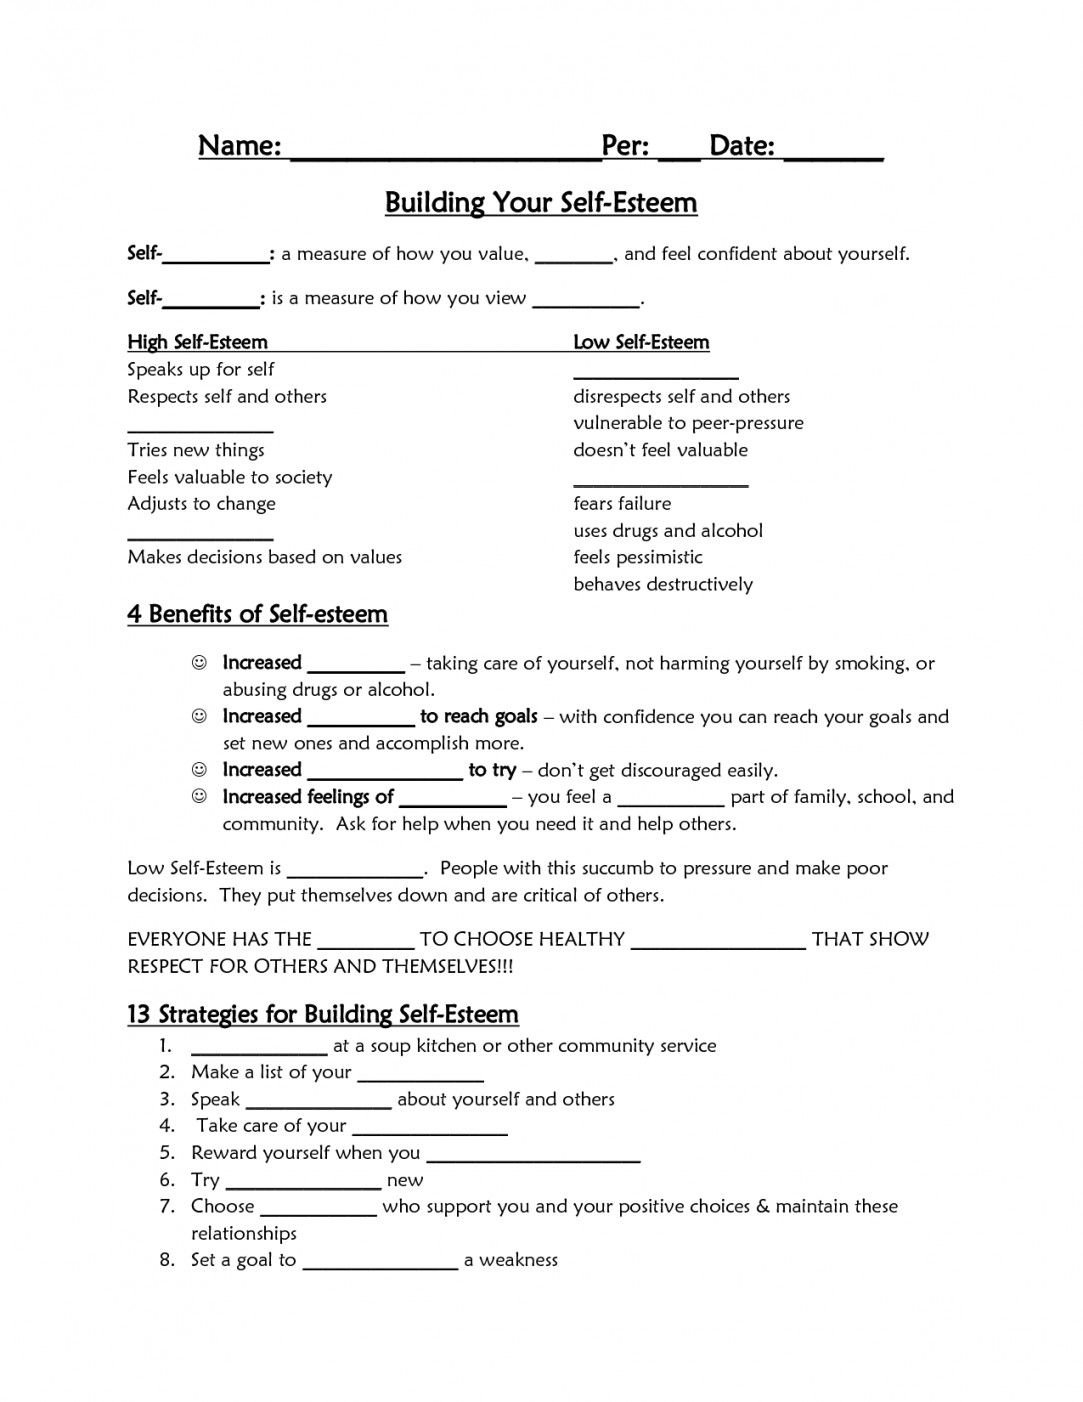 Self Esteem Therapy Worksheets  Yooob Inside Self Esteem Worksheets For Adults Pdf